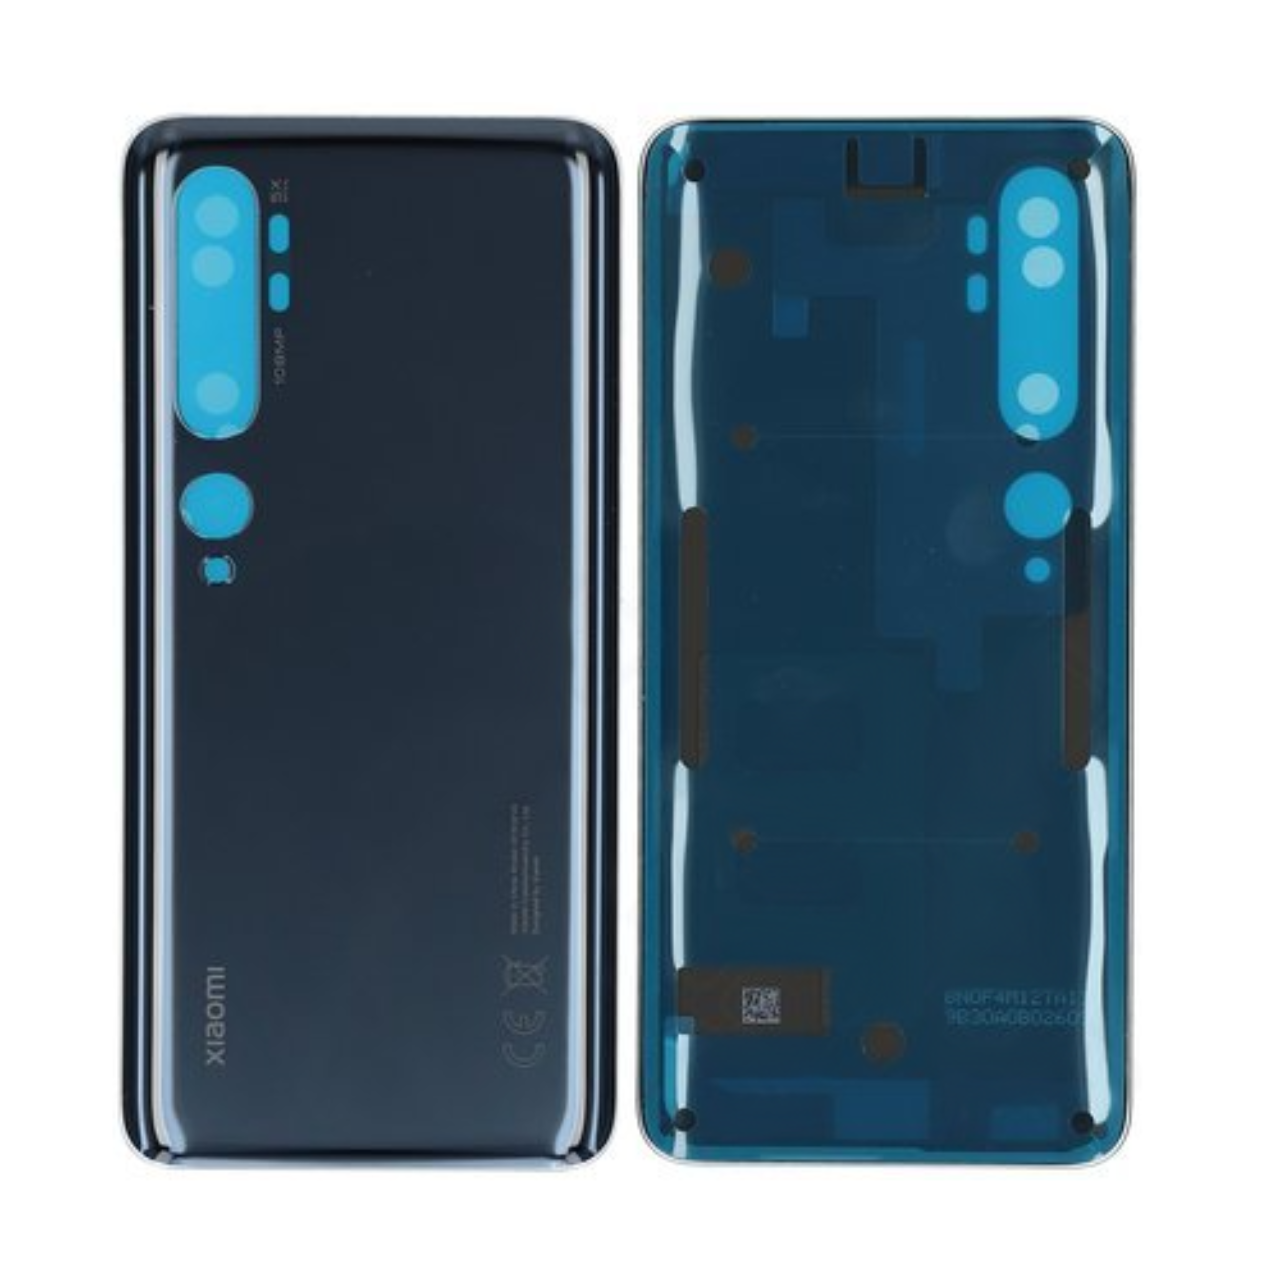 55050000391 L Backcover Black For Xiaomi Mi Note 10 M1910 F4 G Note 10 Pro M1910 F4 S